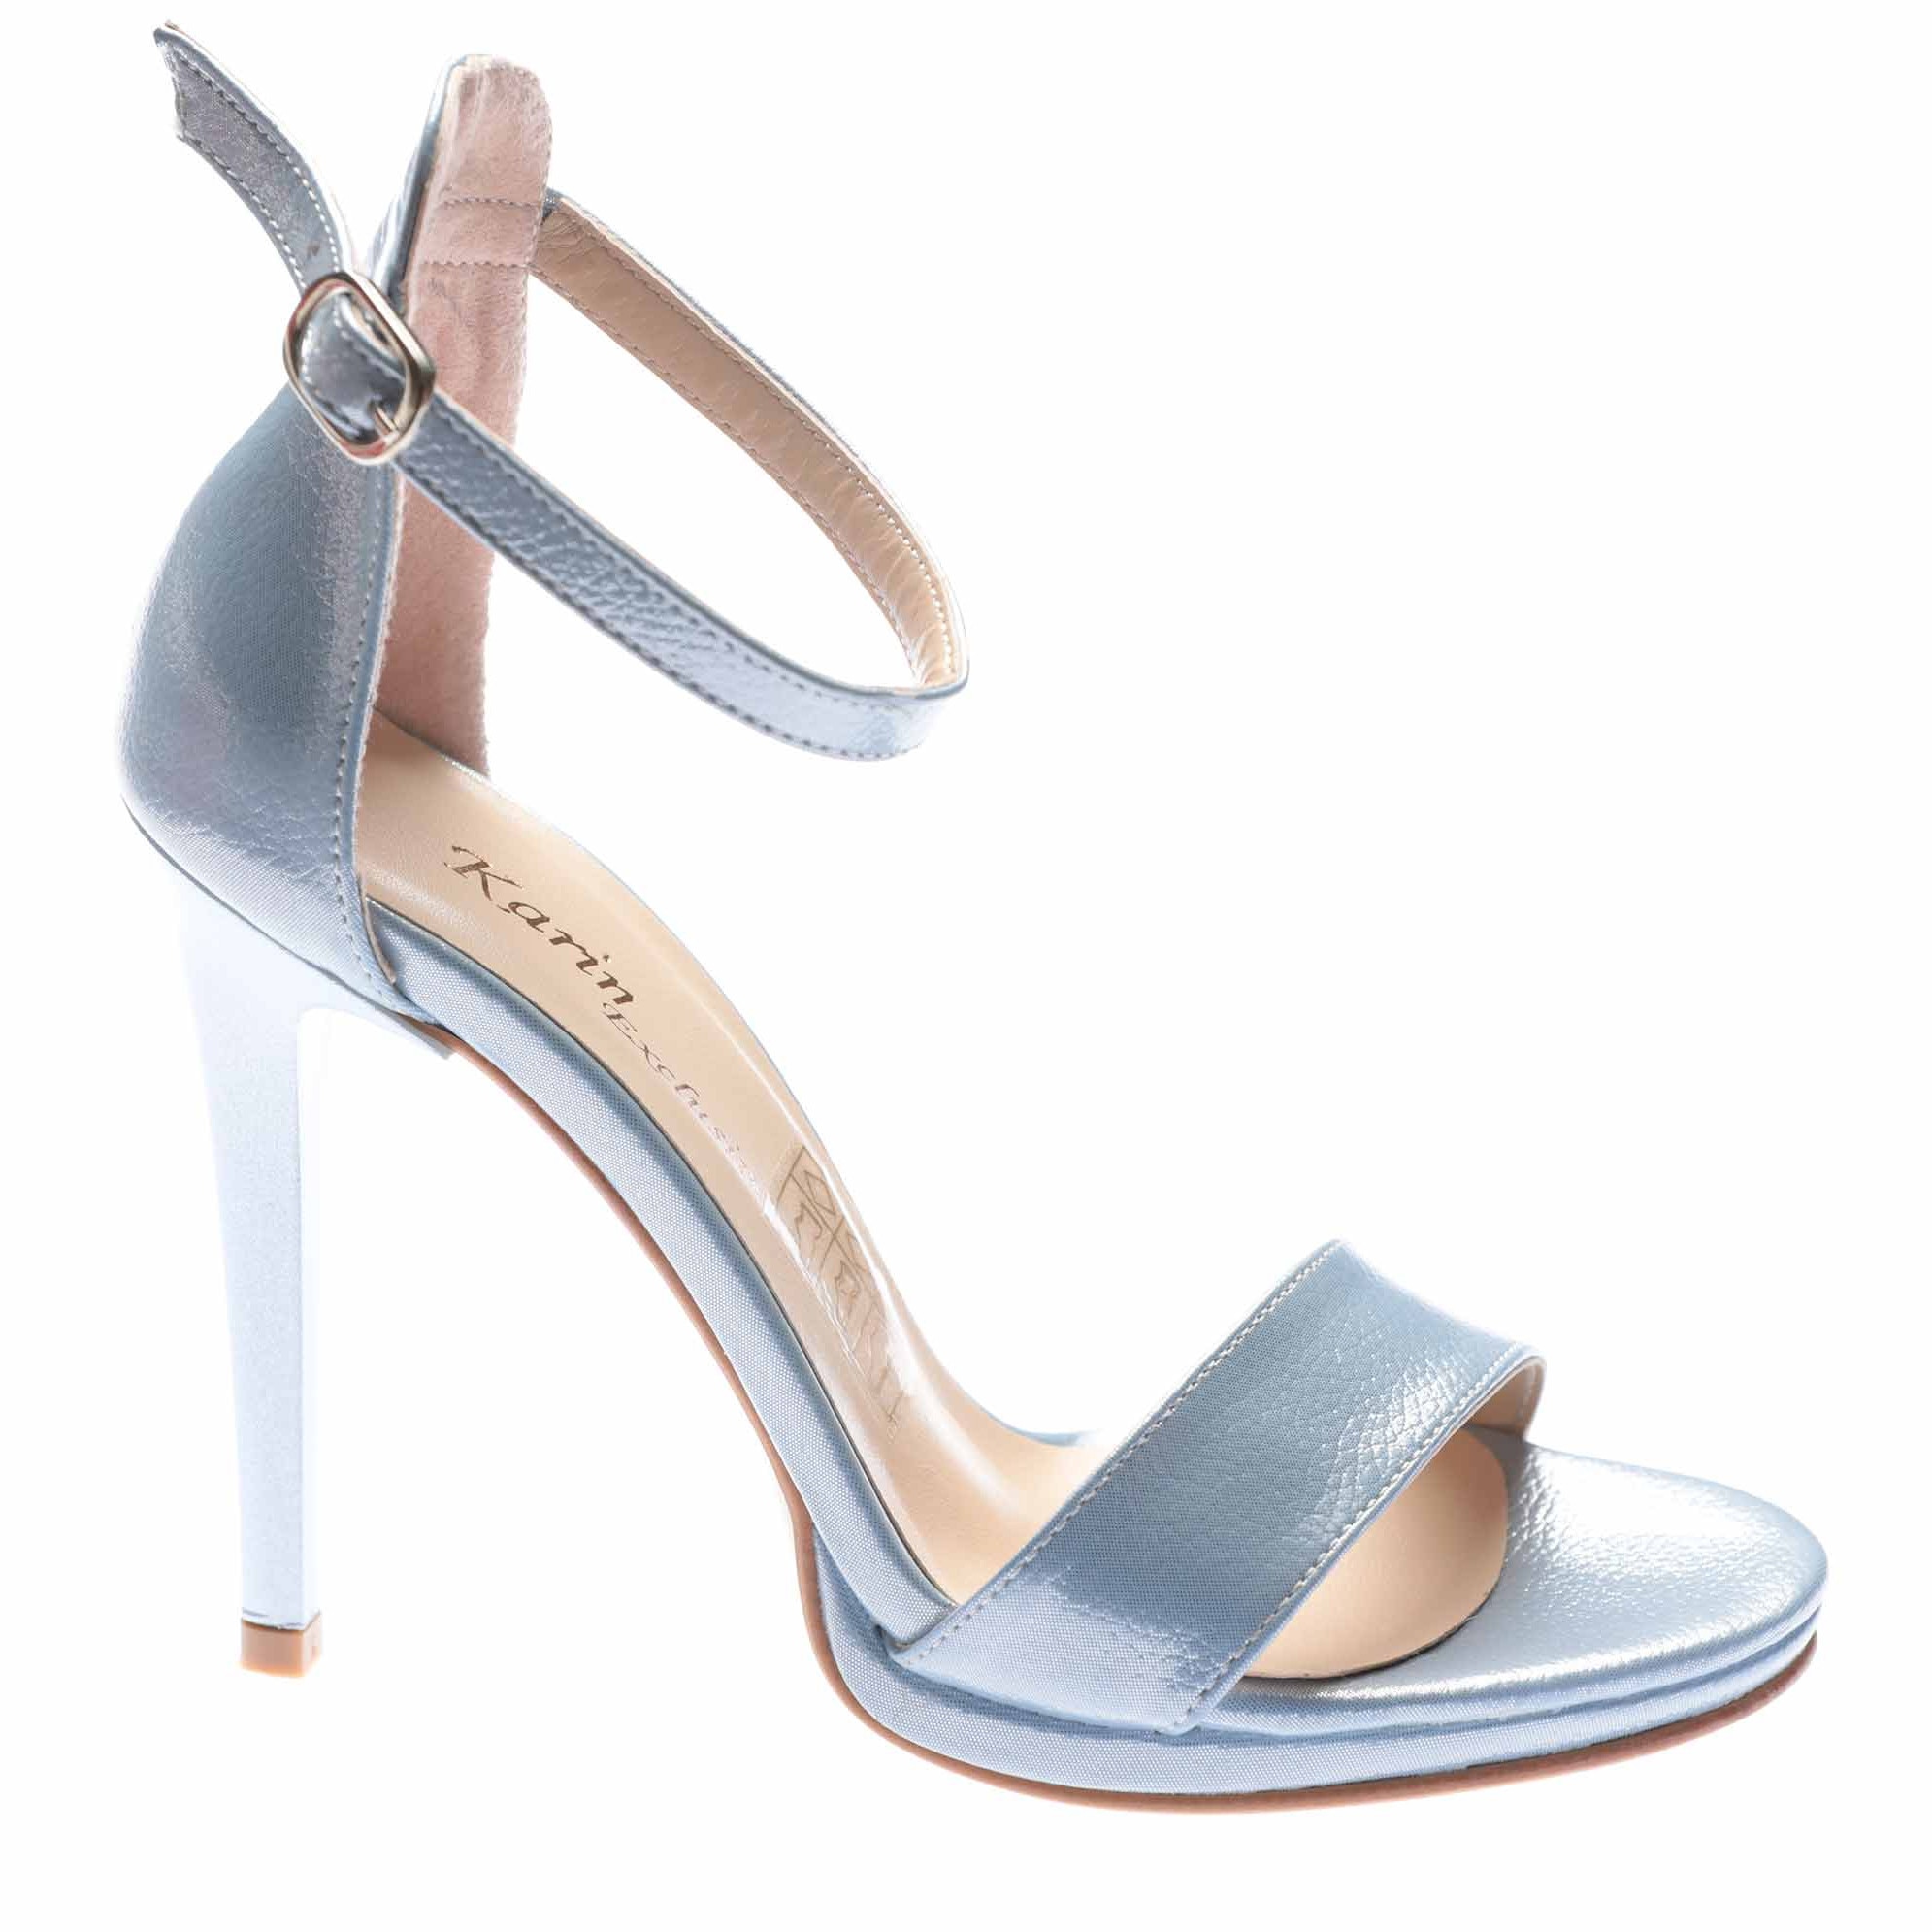 Sandale elegante dama Karin 6300, Albastru, piele naturala, 35 - eMAG.ro